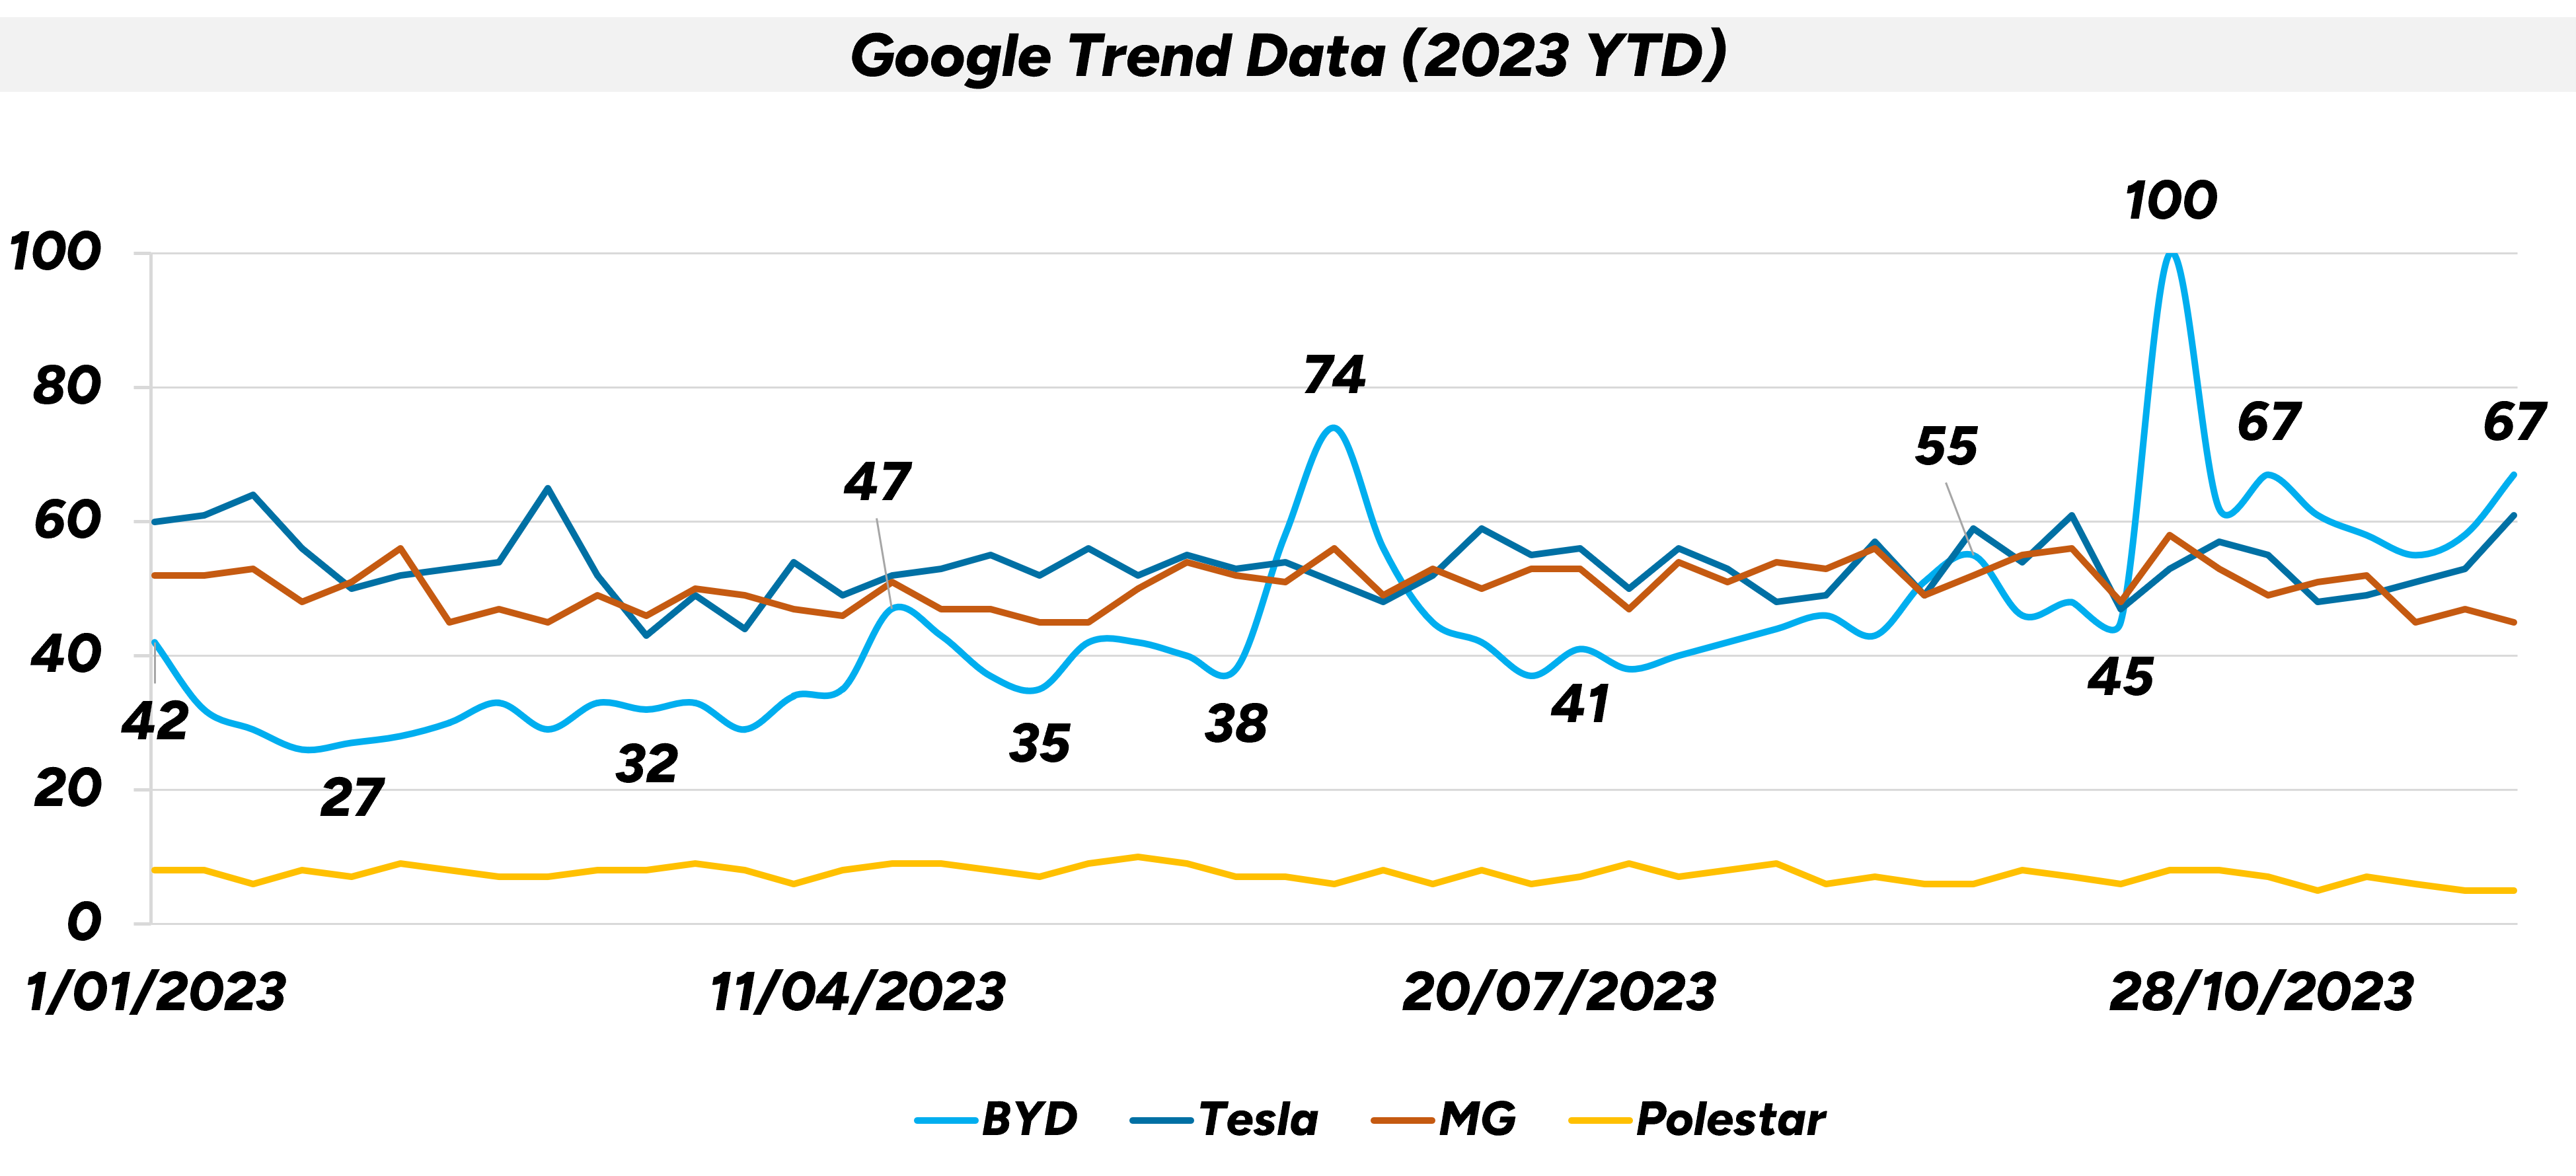 new brands on growth trajectory as Australian EV market expands. - Google trend Data 2023 YTD